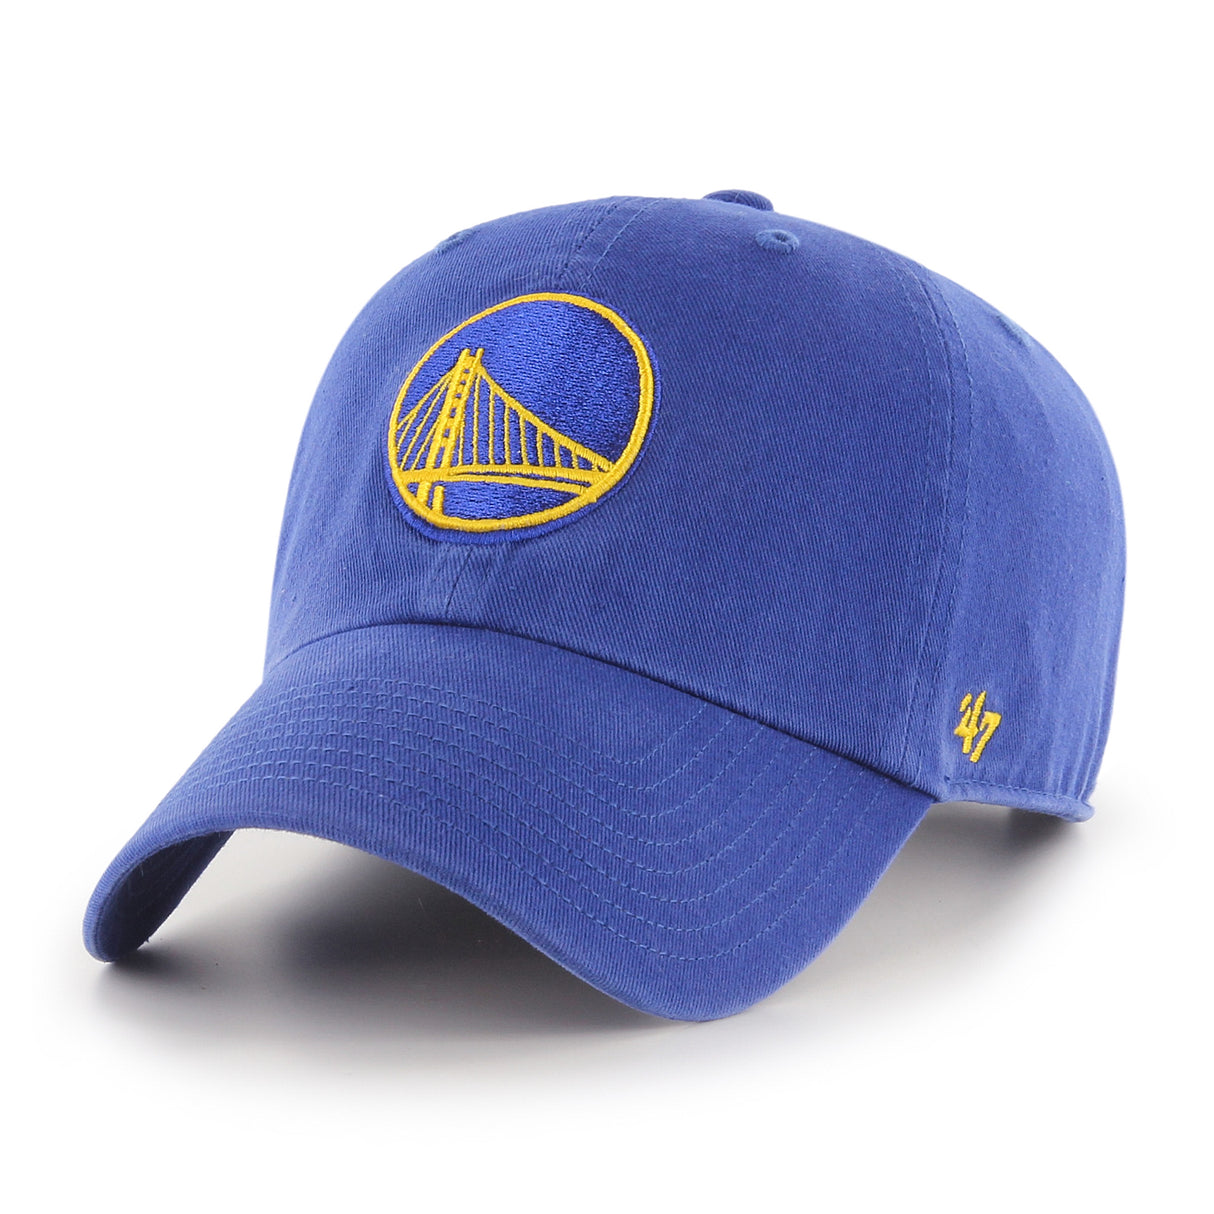 Warriors 47 Brand Hat